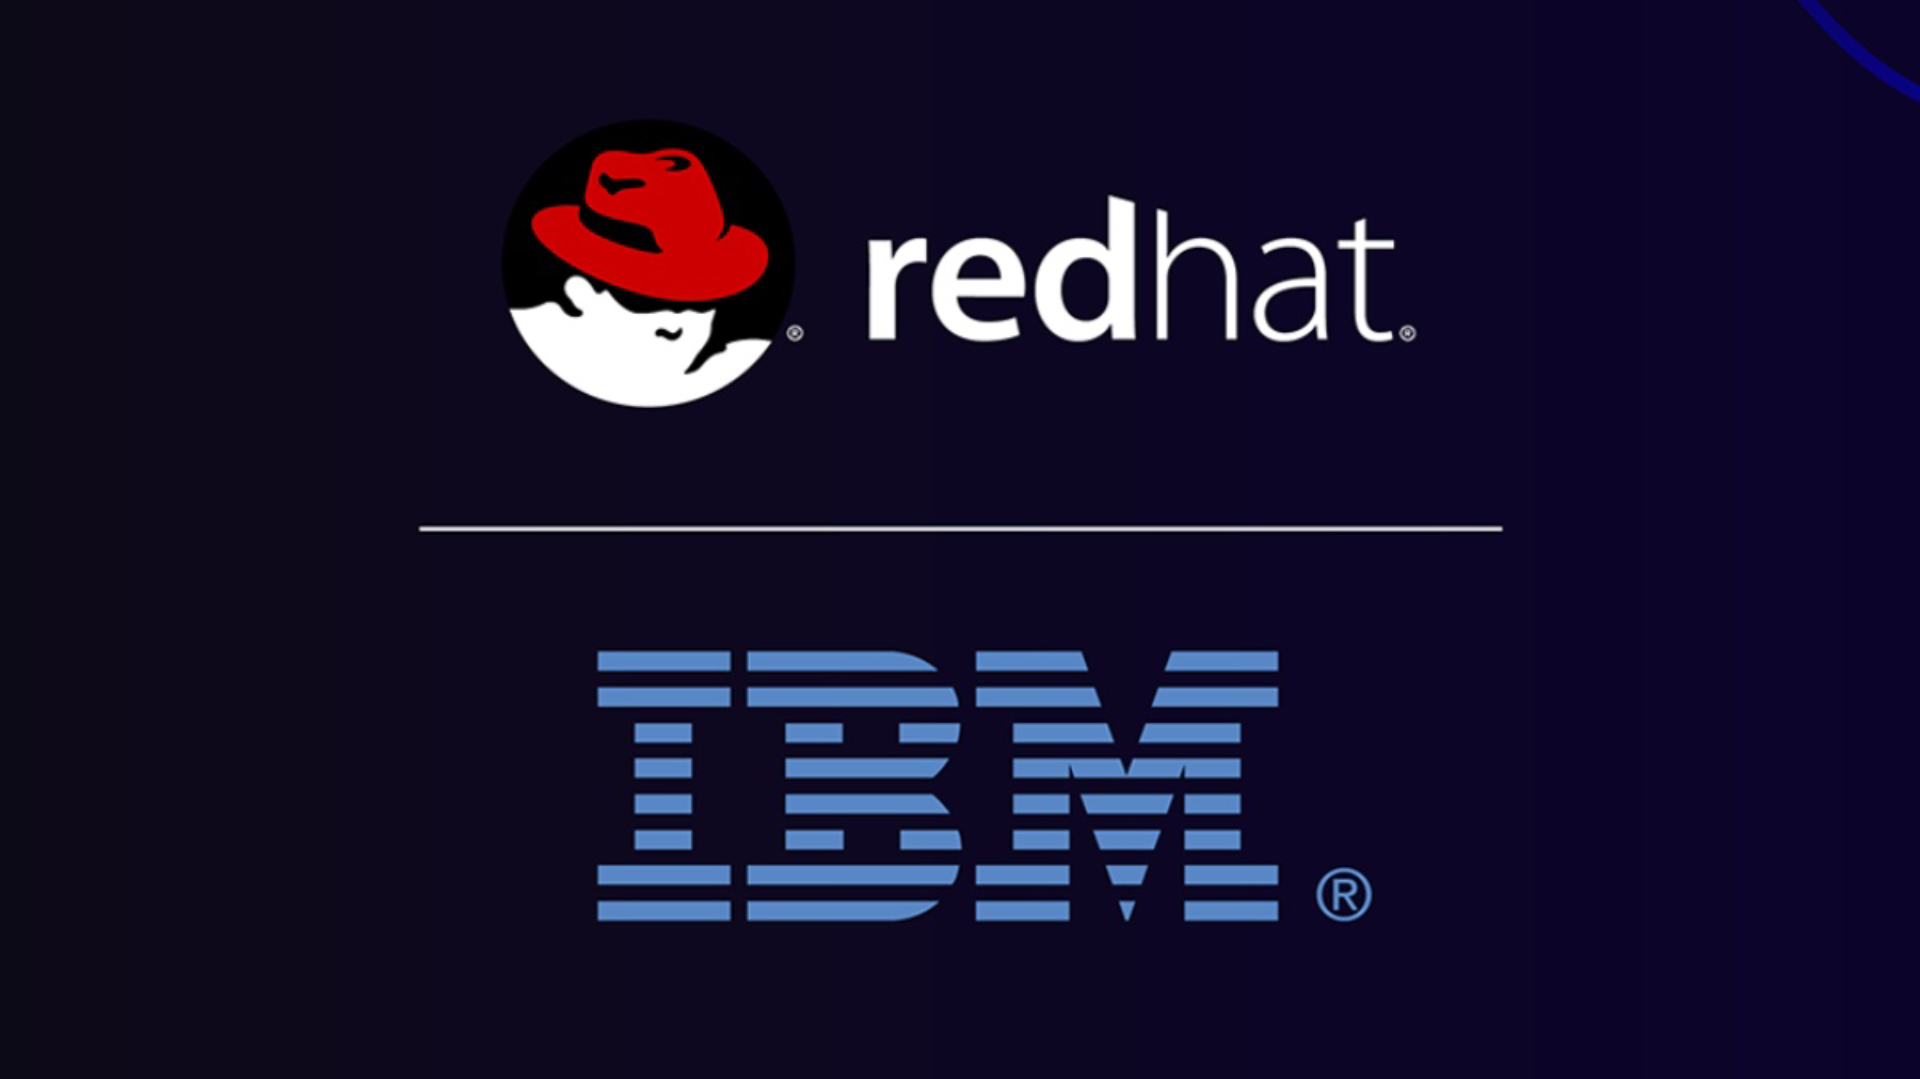 Red hat 2. IBM Red hat. Rad hat заставка. Red hat Linux. Red hat va IBM.